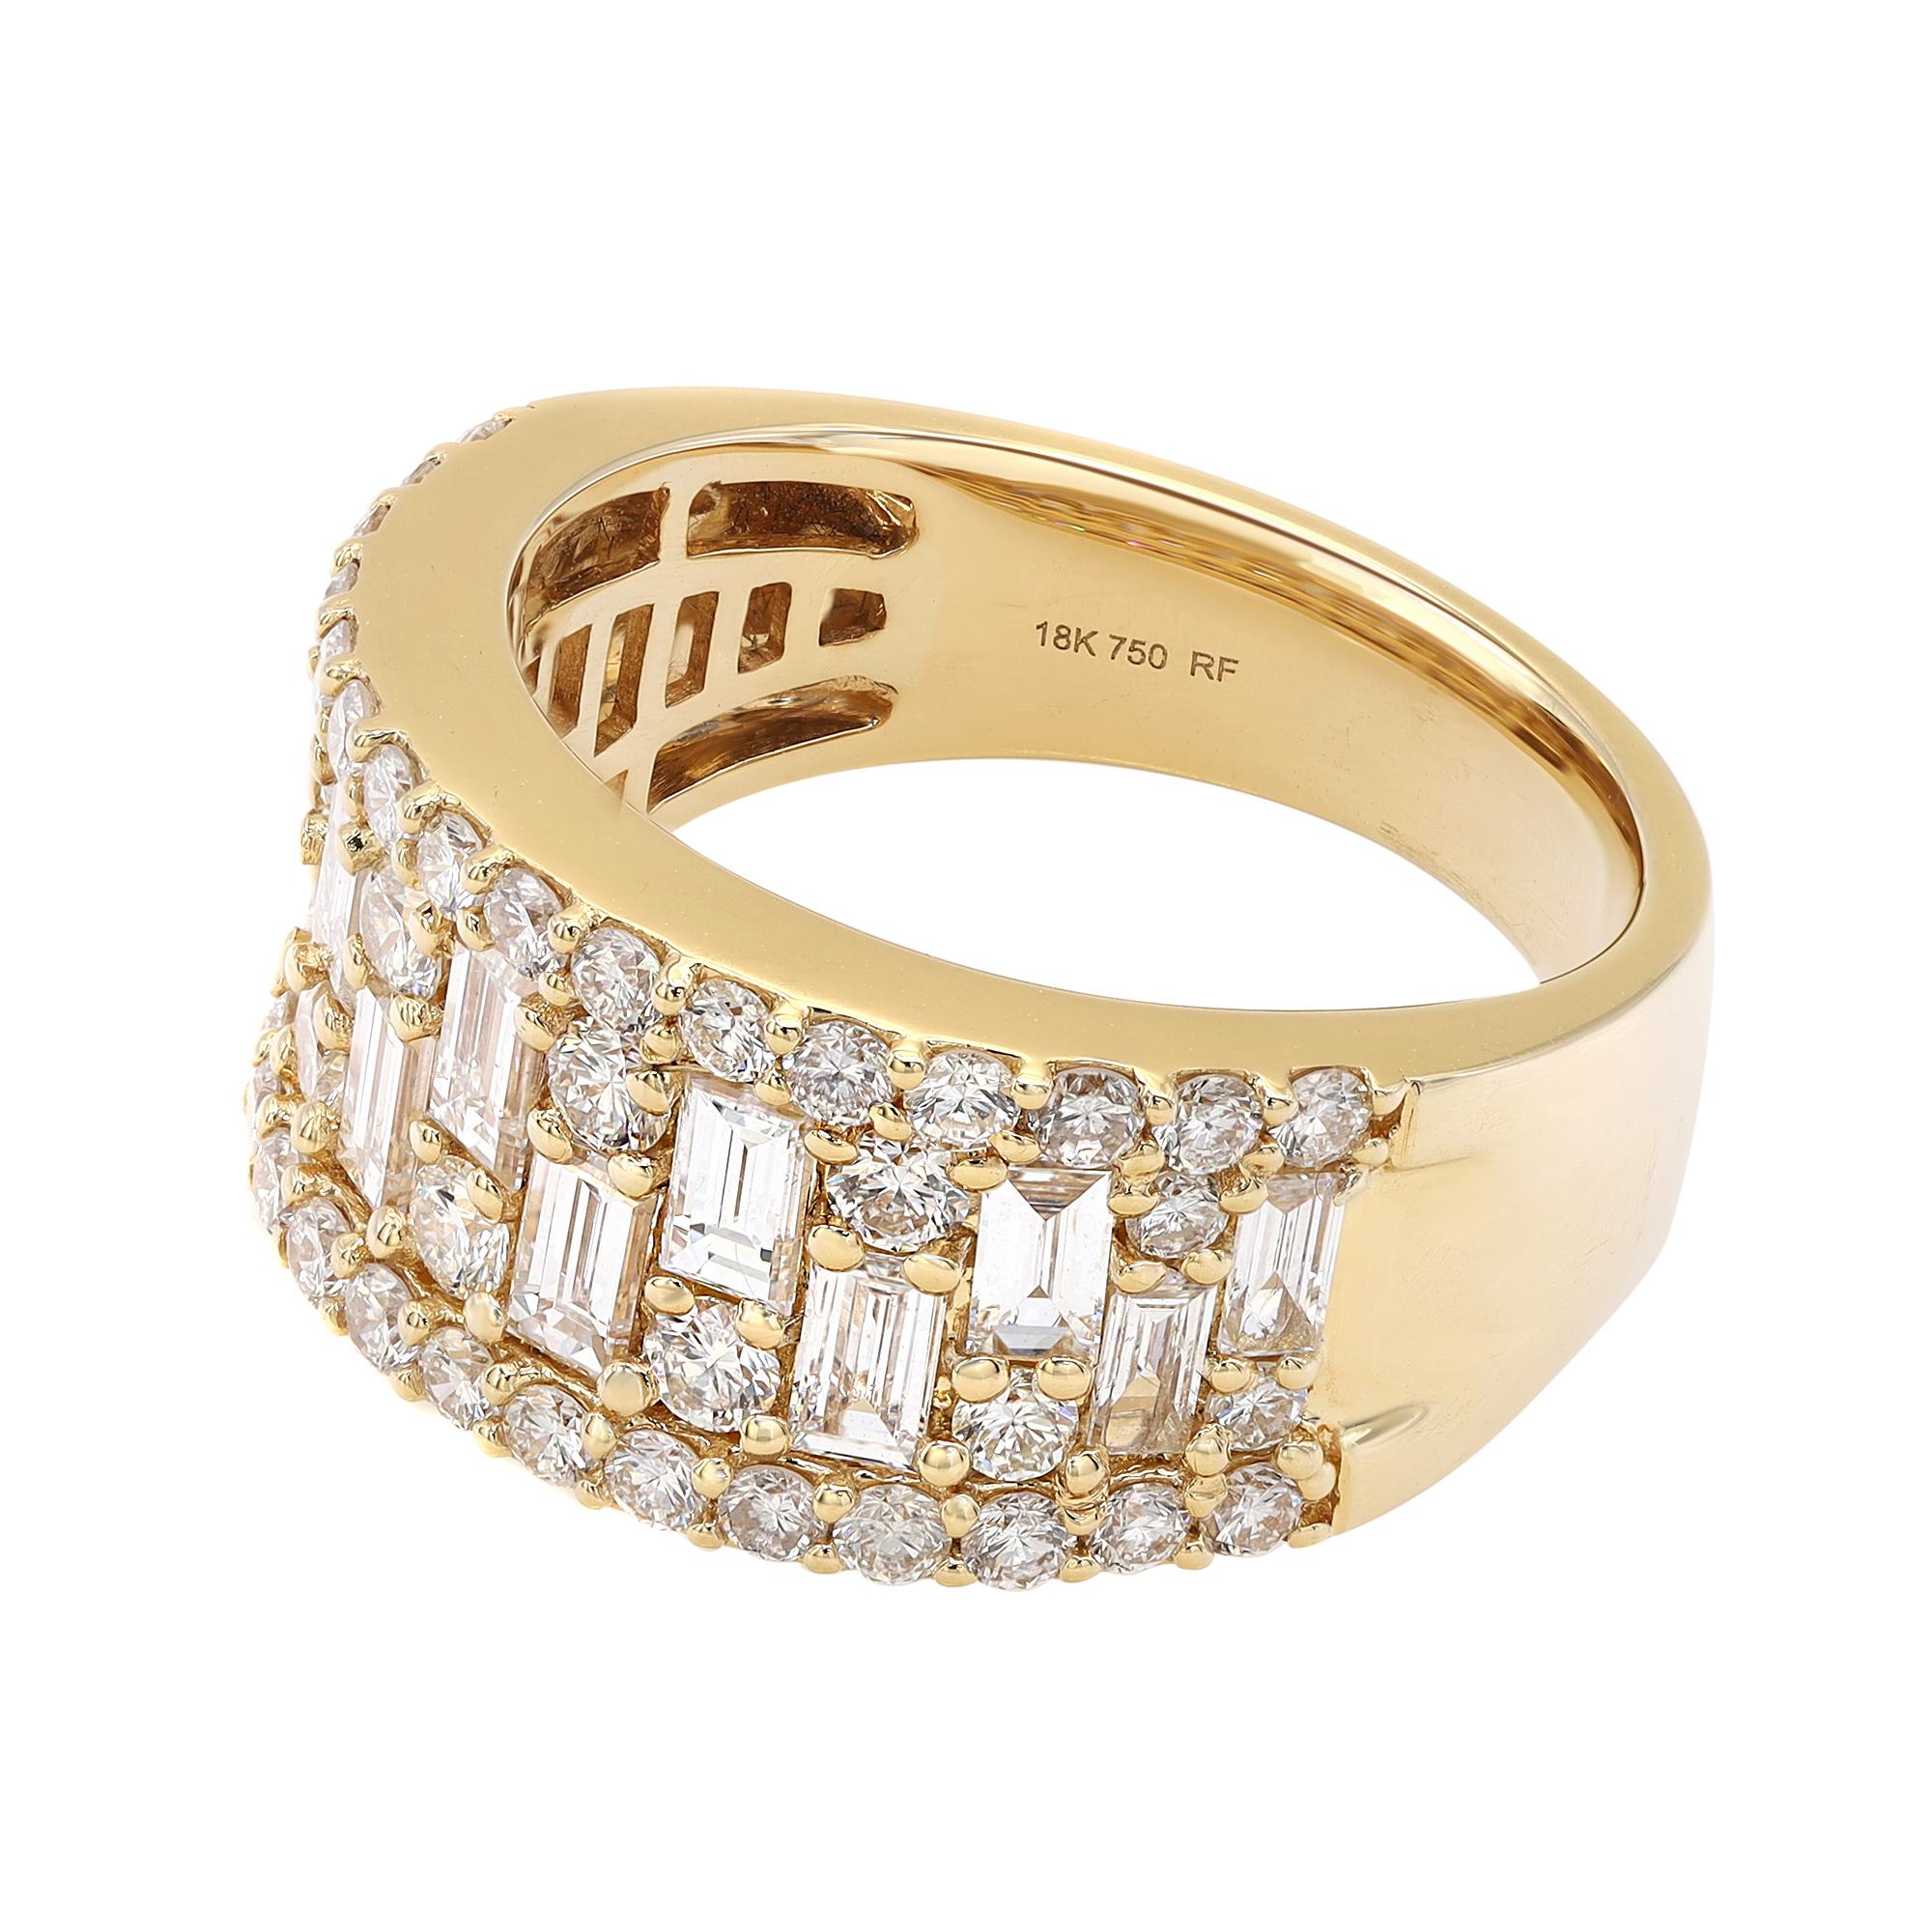 Baguette Cut Rachel Koen Baguette Round Cut Diamond Ring 18K Yellow Gold 2.11cttw For Sale